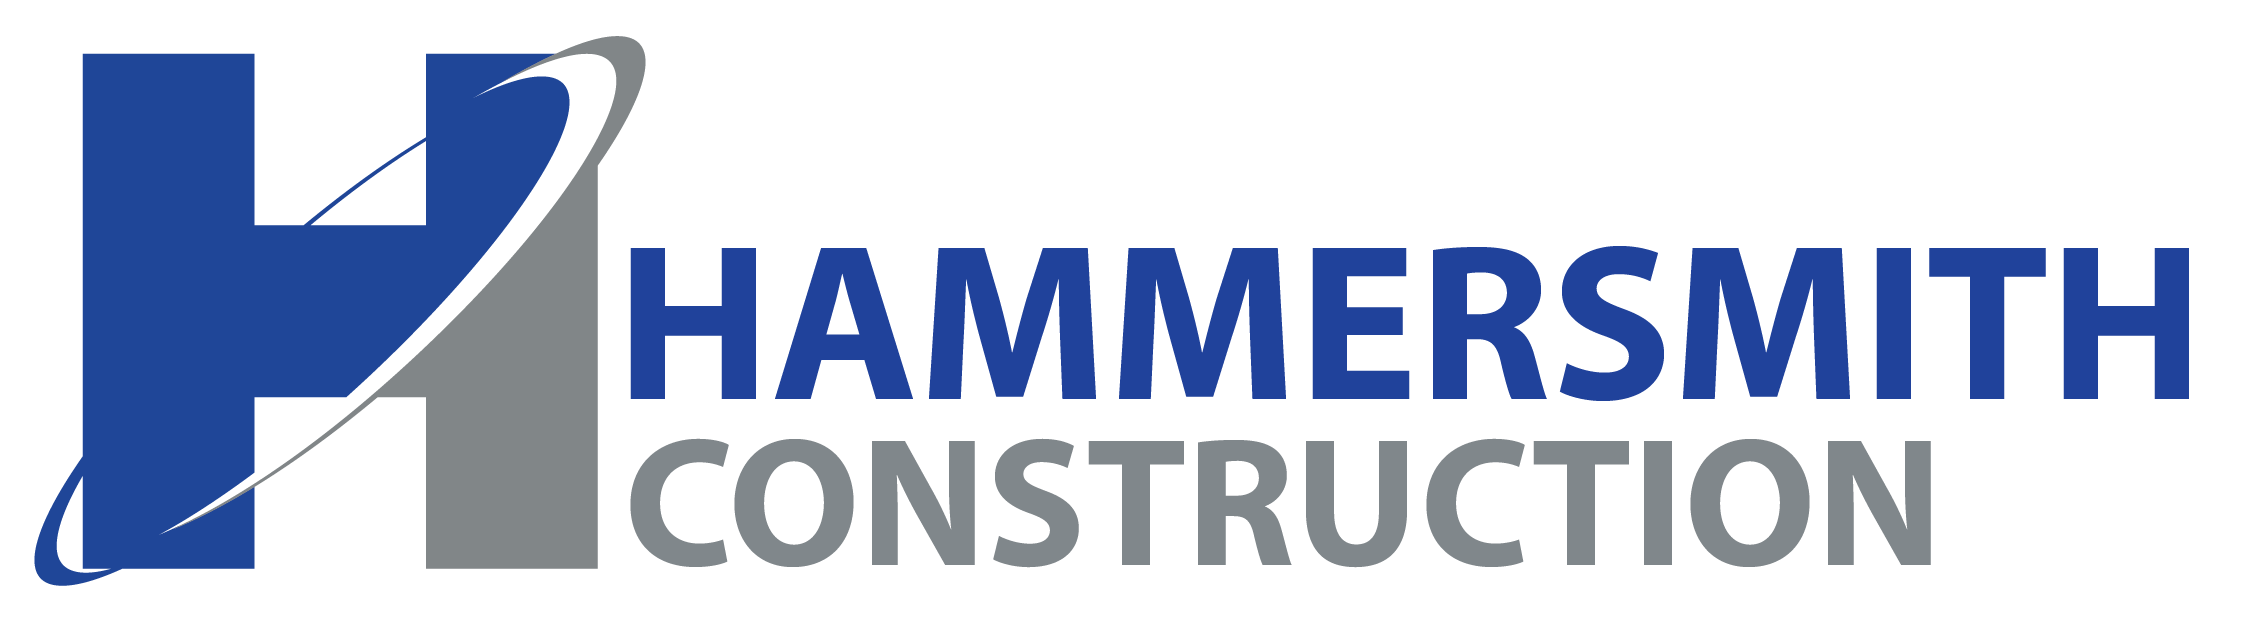 Hammersmith Construction Logo